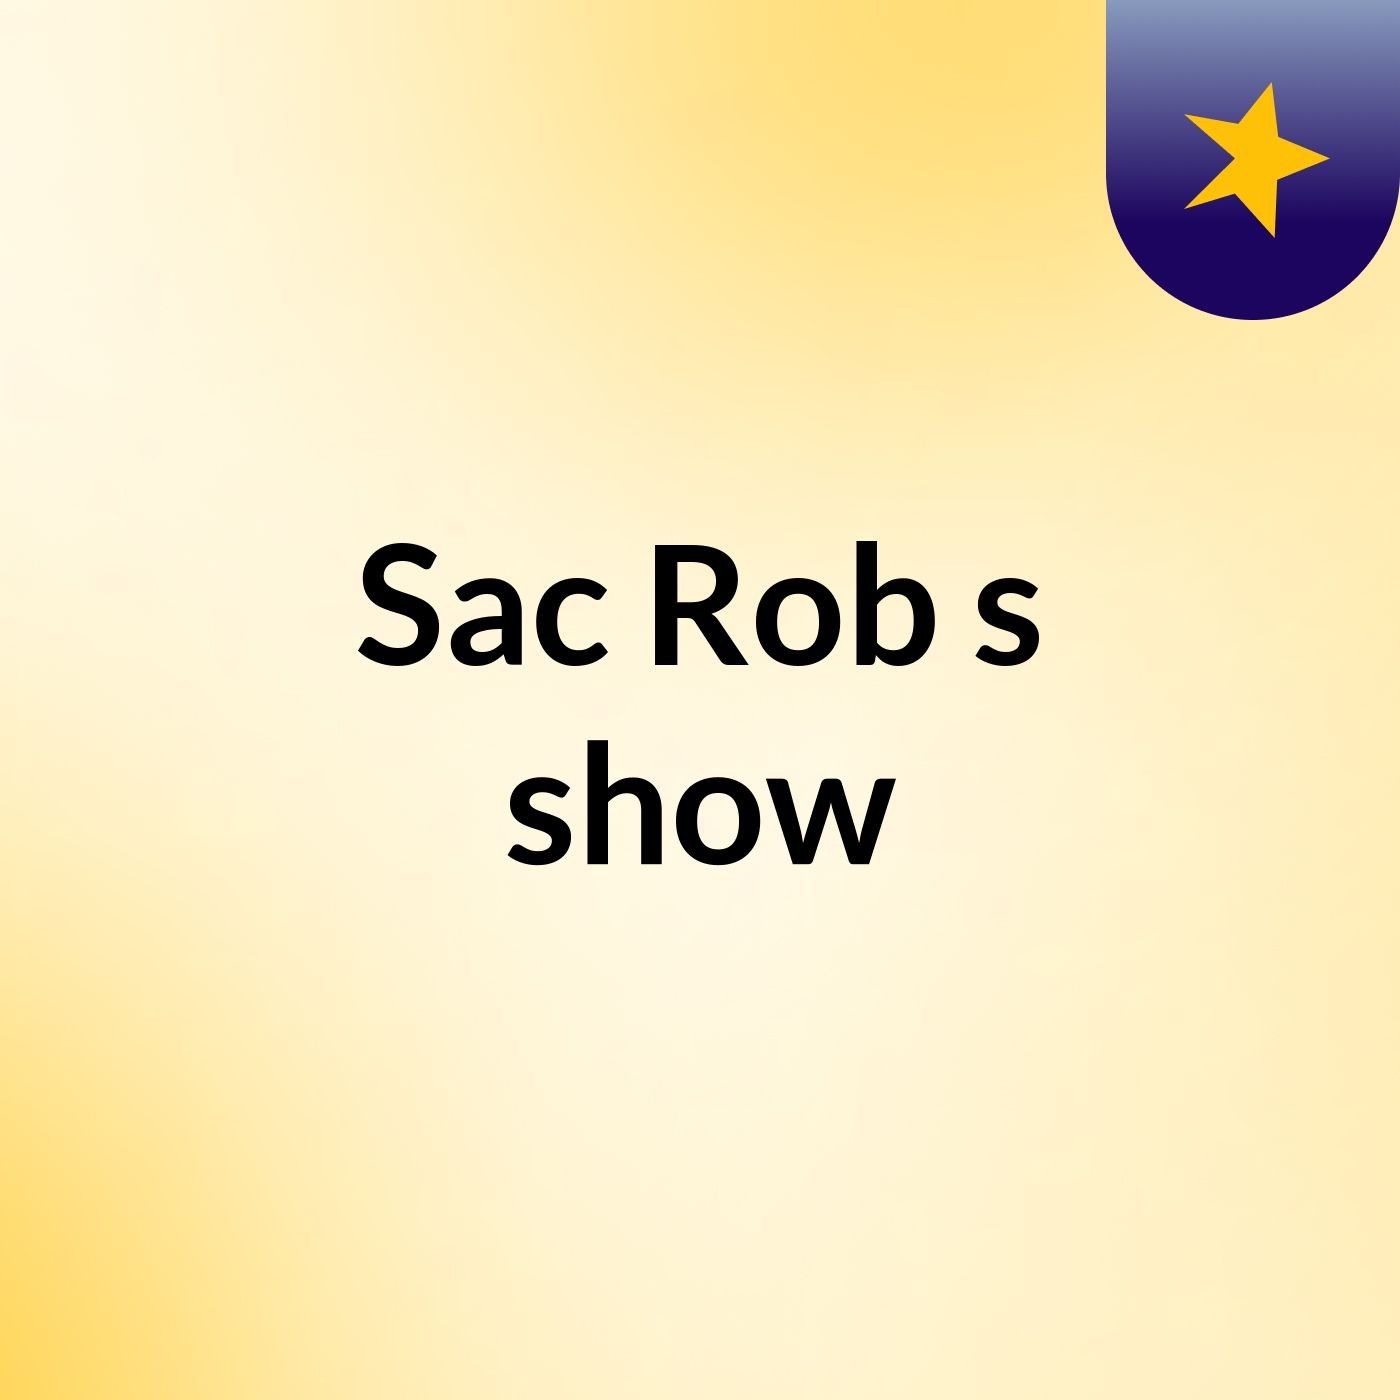 Sac Rob's show